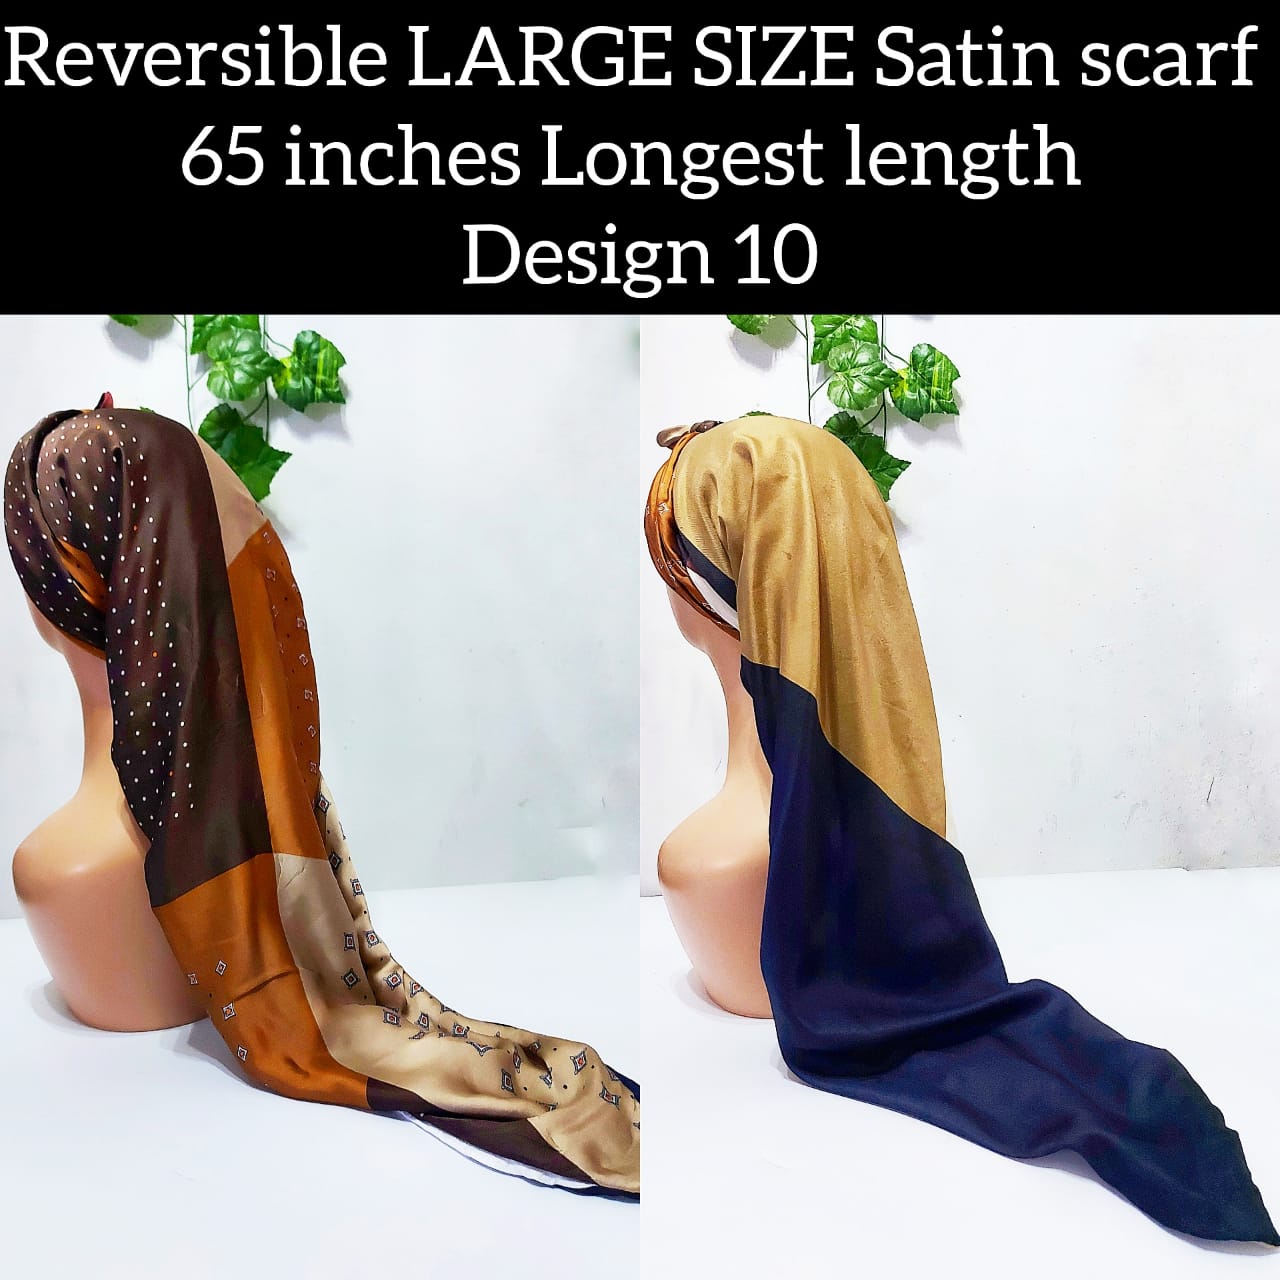 Reversible LARGE SIZE Satin Scarf Design 10